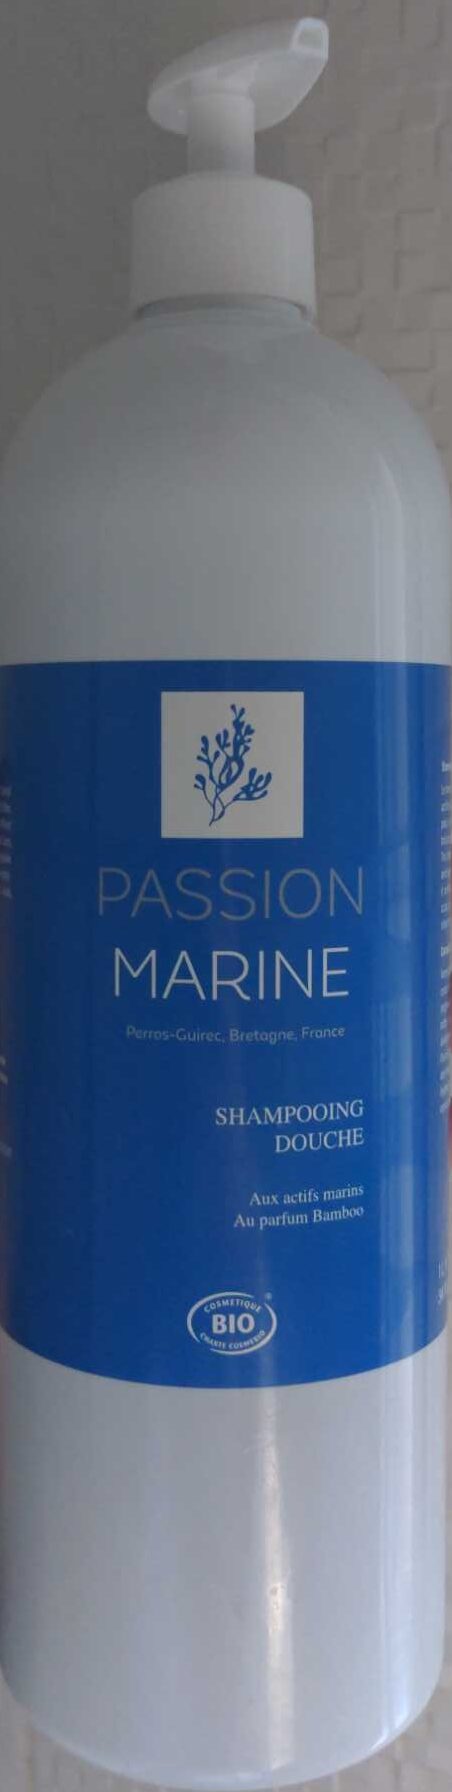 Passion Marine - Product - fr